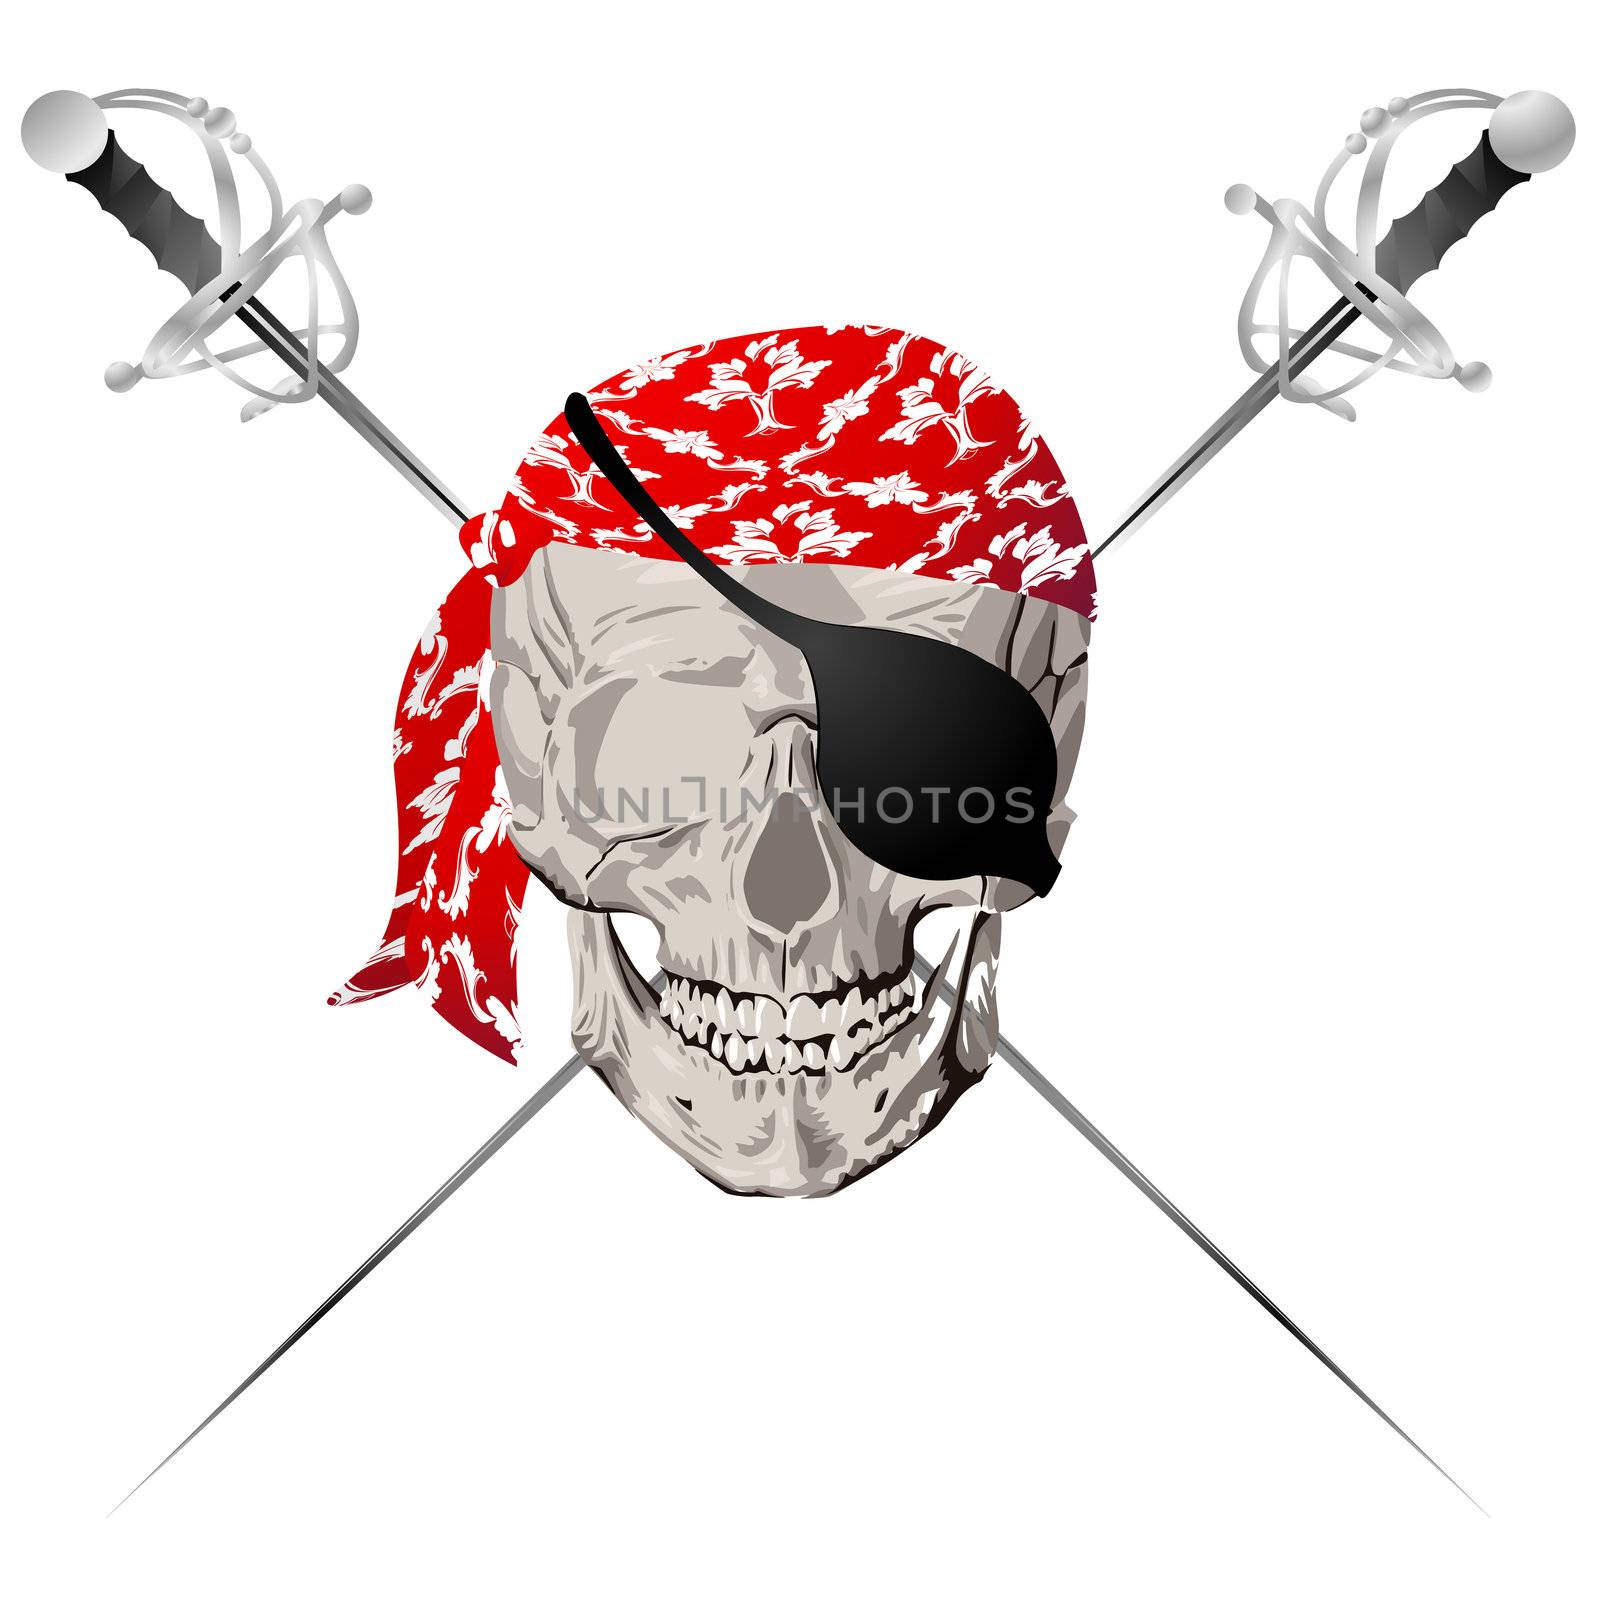 Pirate skull by Lirch